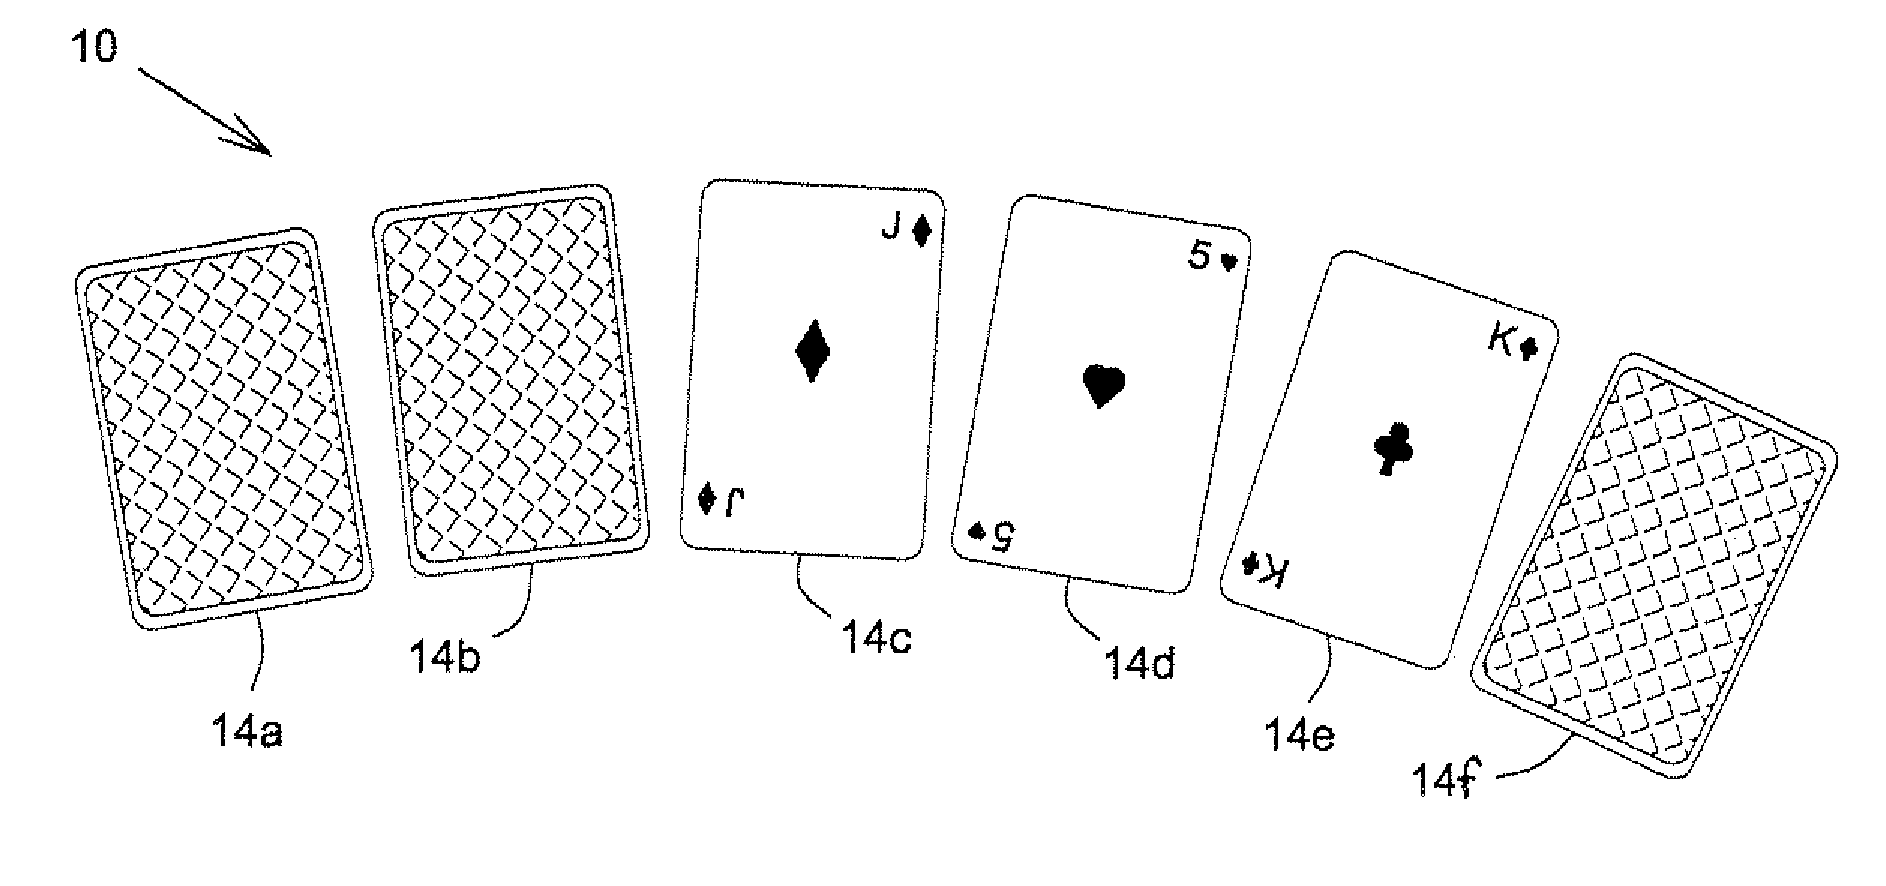 Poker card game